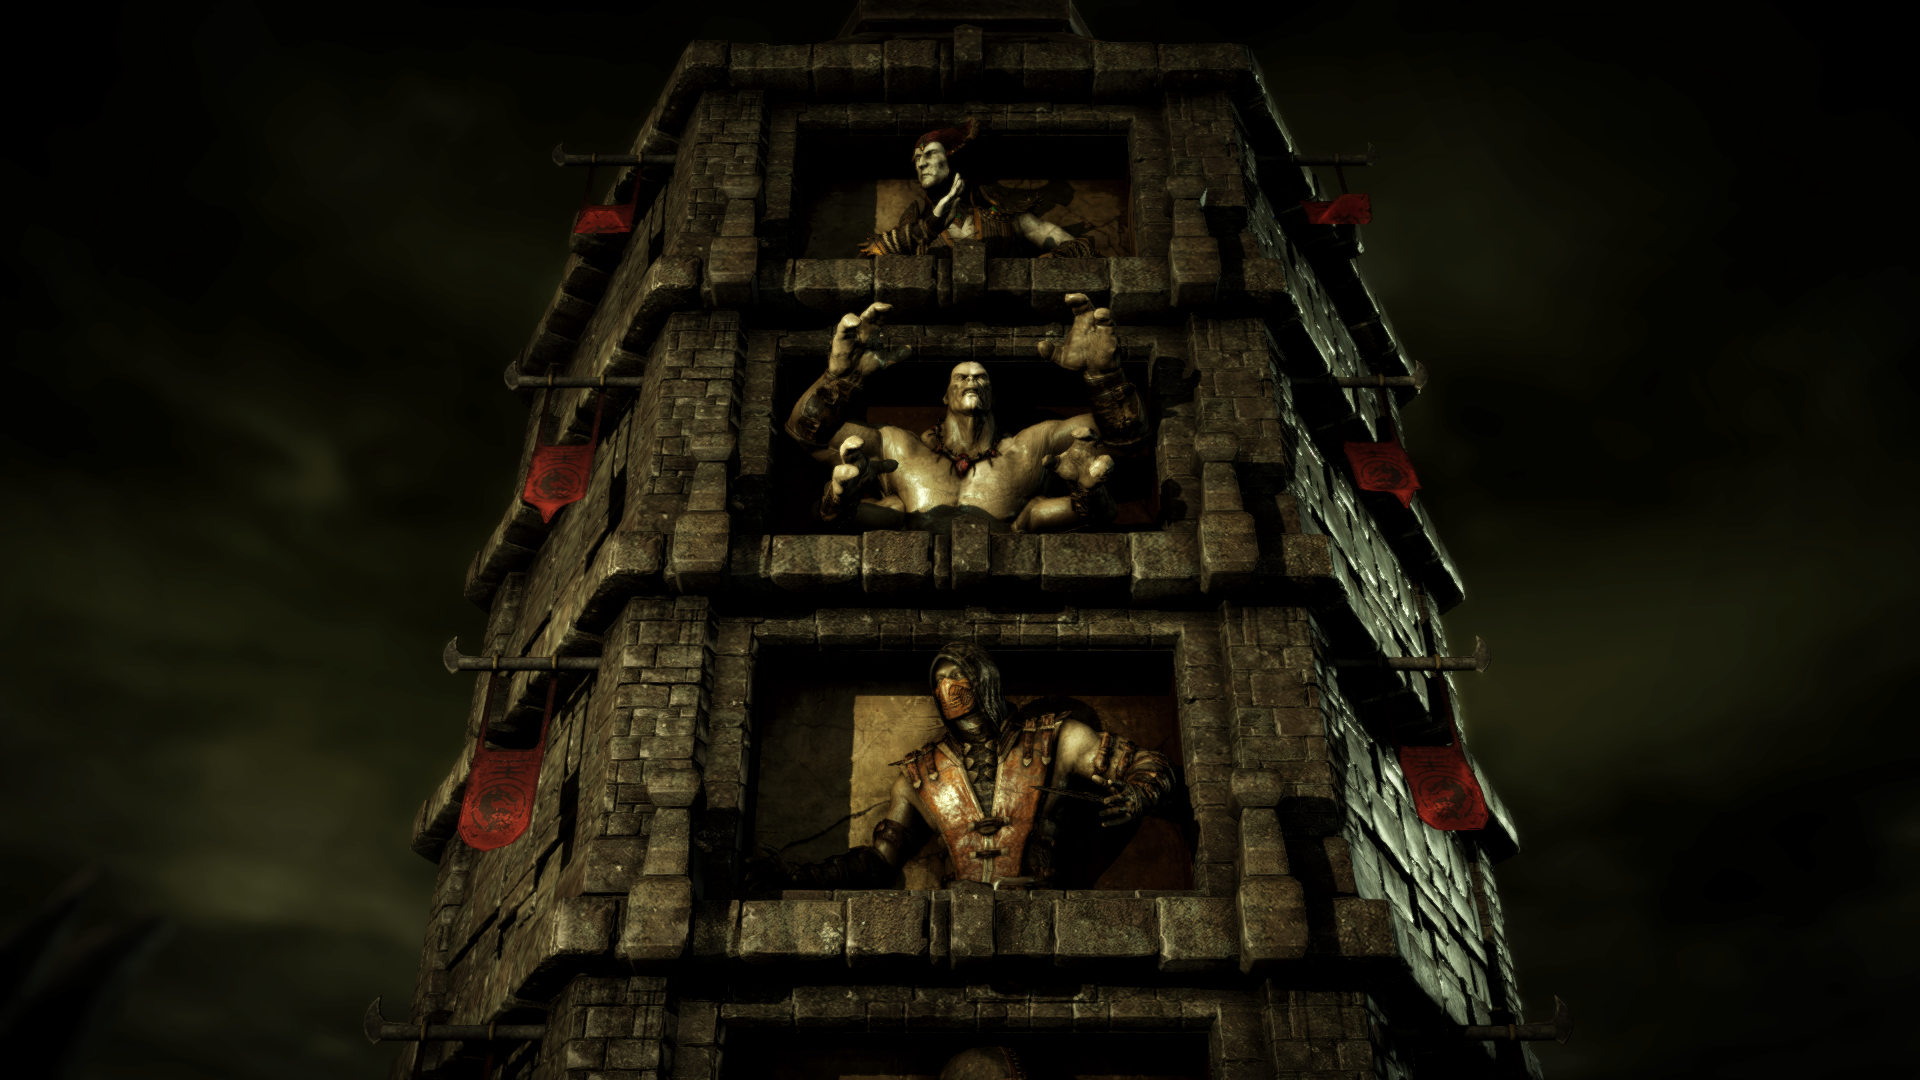 Mortal Kombat башня. Мортал комбат 10 башни. Башня Mortal Kombat 3. Башня из мортал комбат. Мортал комбат столбик